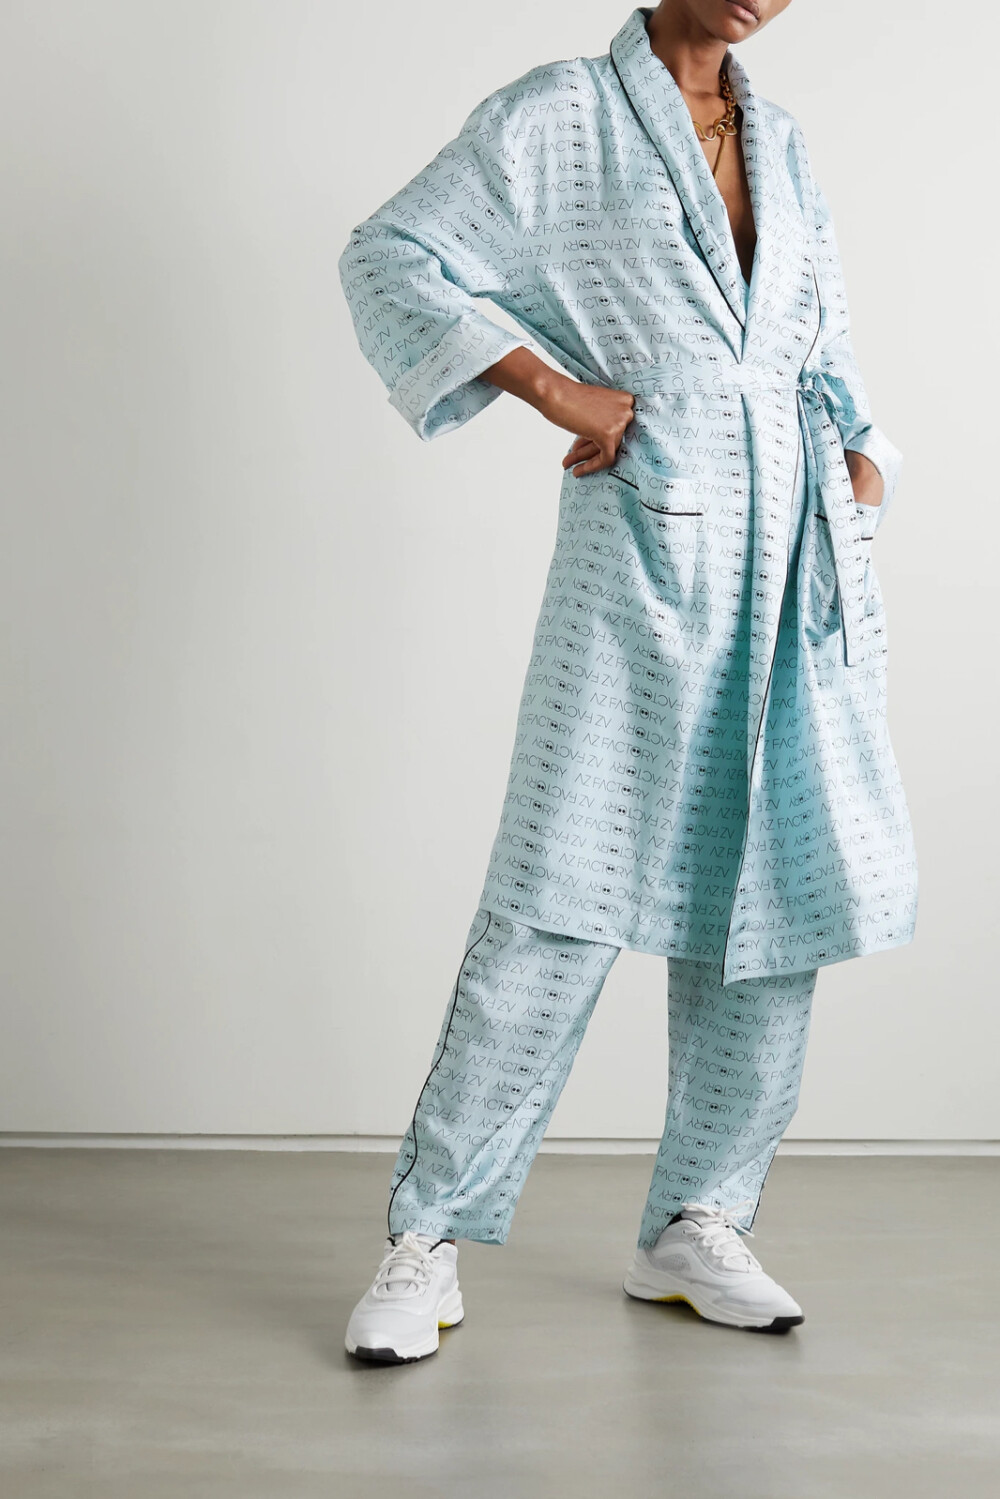 AZ Factory 是已故设计师 Alber Elbaz 的心血结晶，他深信家居服既要舒适又要迷人，应该拥有不输高定的奢华质感。这款 “Look But Don't Touch” 睡袍出自品牌 “Pijama” 系列，是以亮泽的真丝斜纹布裁成，宽松衣身印有品牌 Logo 字母，建议用随附腰带收束腰身。